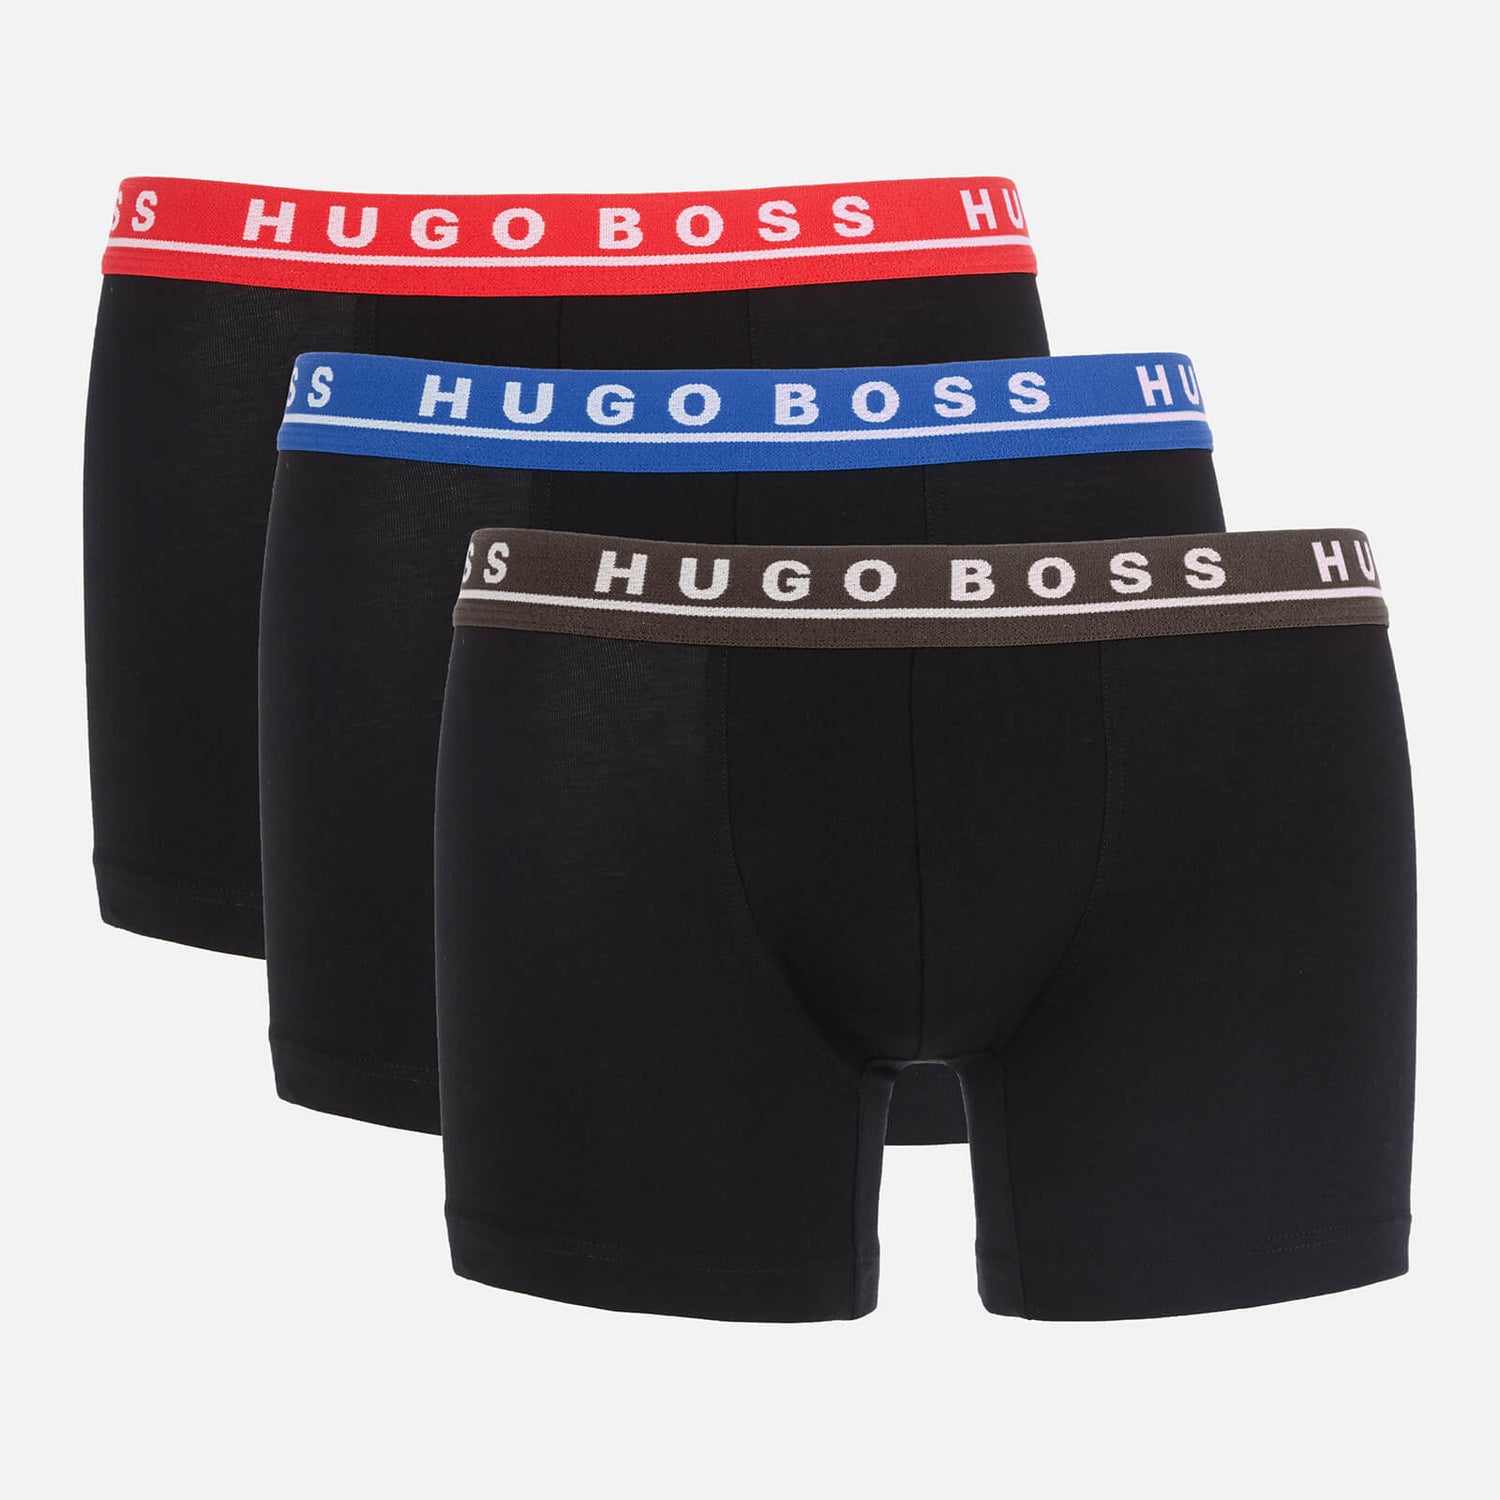 BOSS Bodywear Men's 3-Pack Boxer Briefs - Blue/Grey/Red